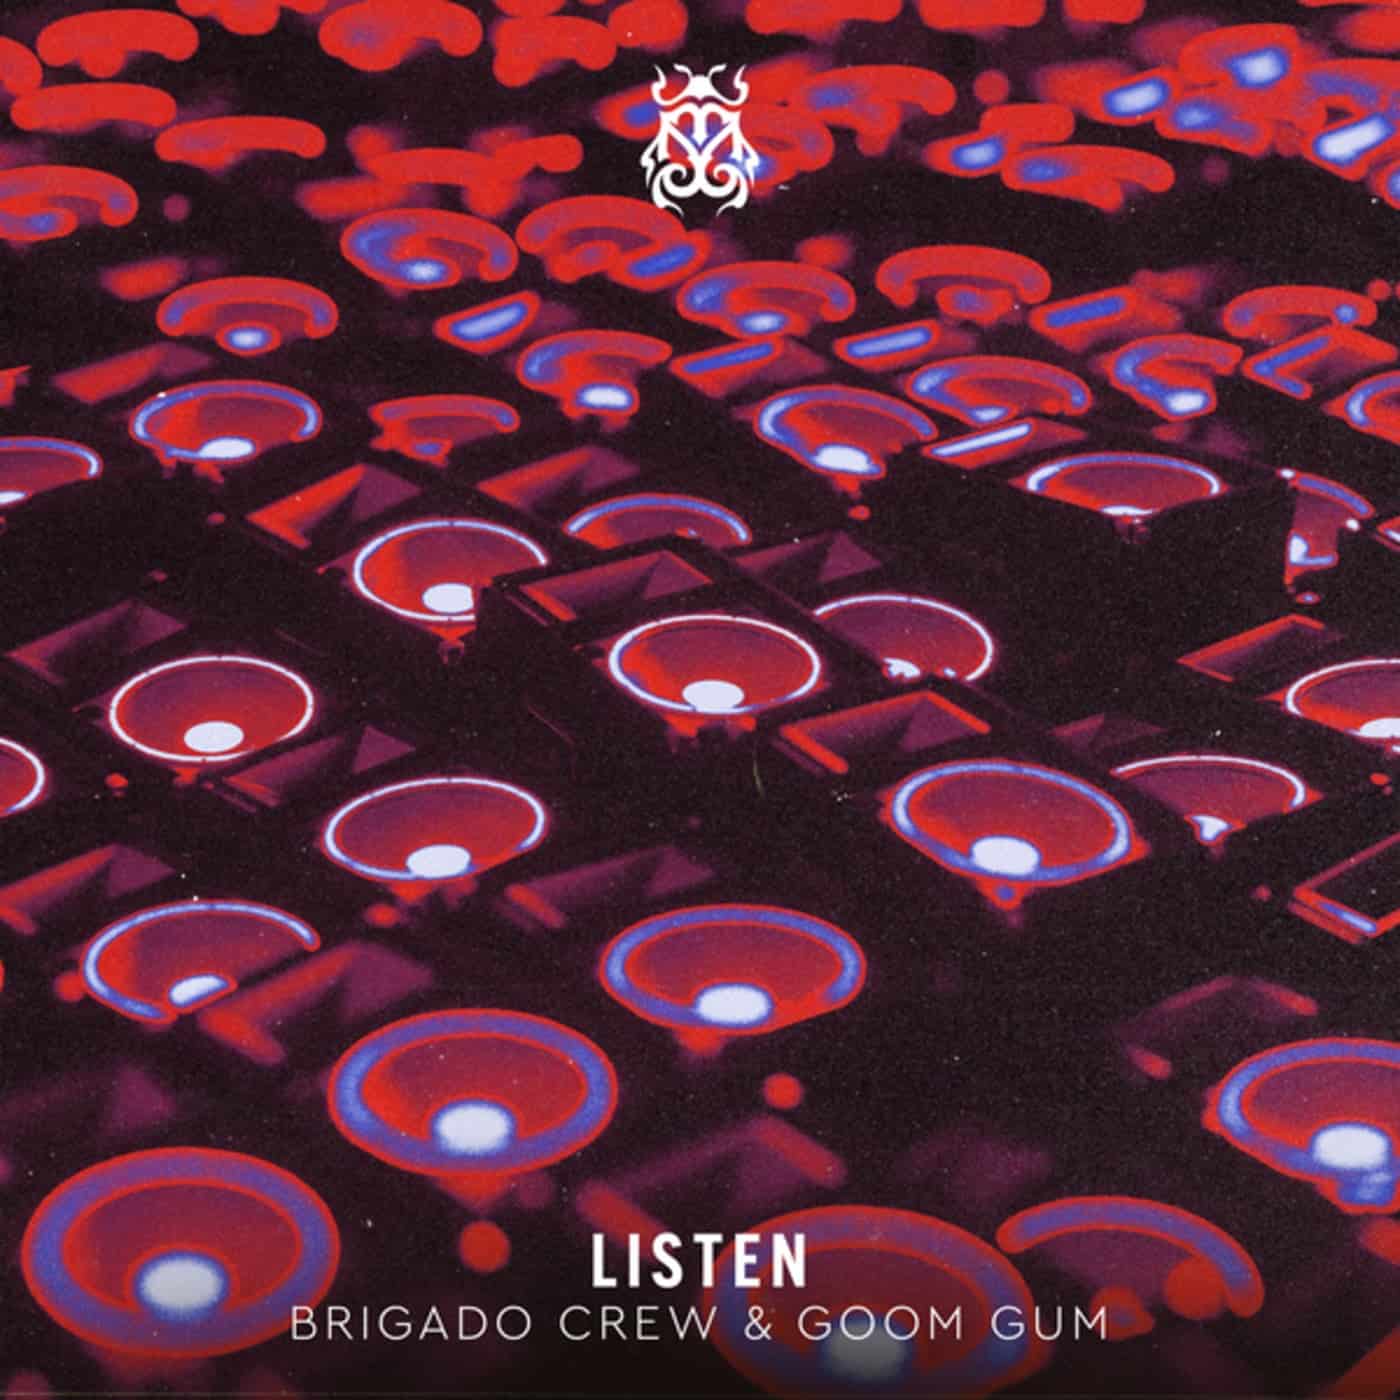 image cover: Brigado Crew, Goom Gum - Listen (Extended Mix) on Tomorrowland Music